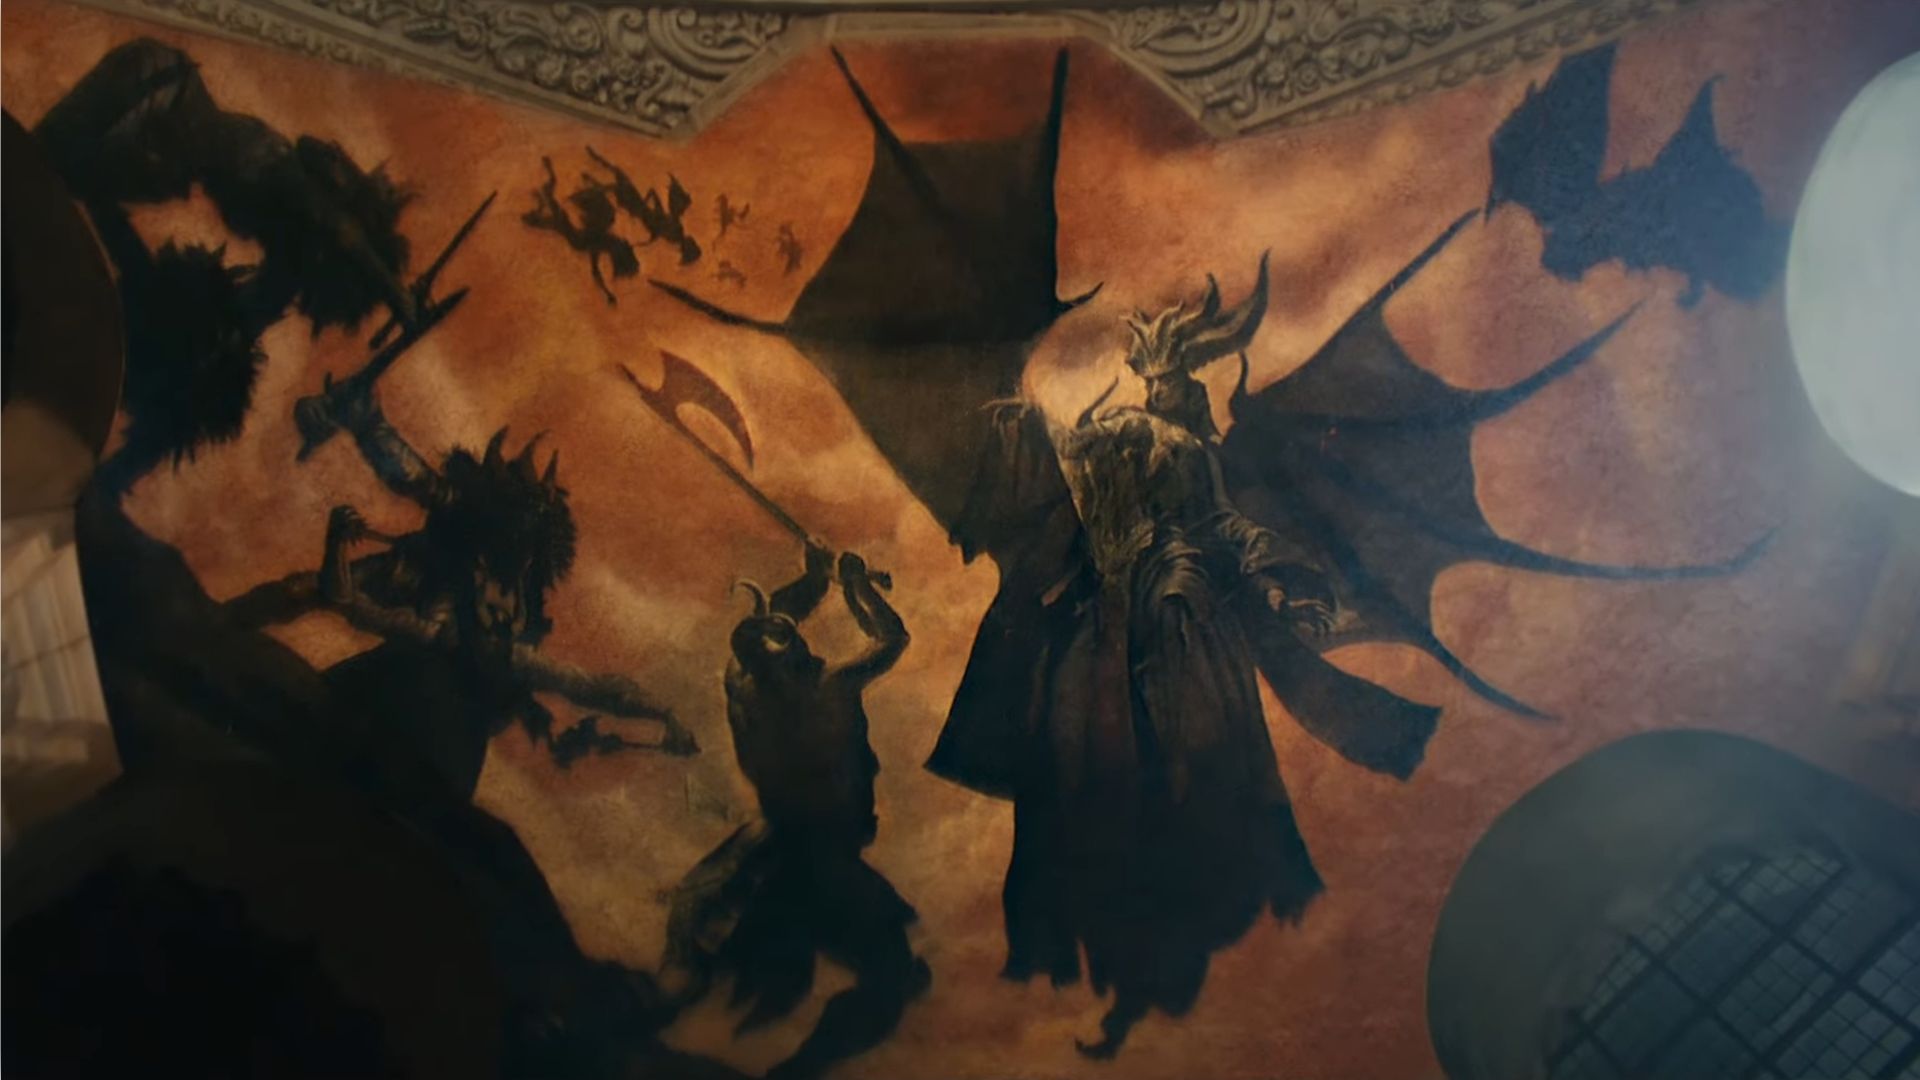 Blizzard создала настоящую фреску ради нового трейлера Diablo IV